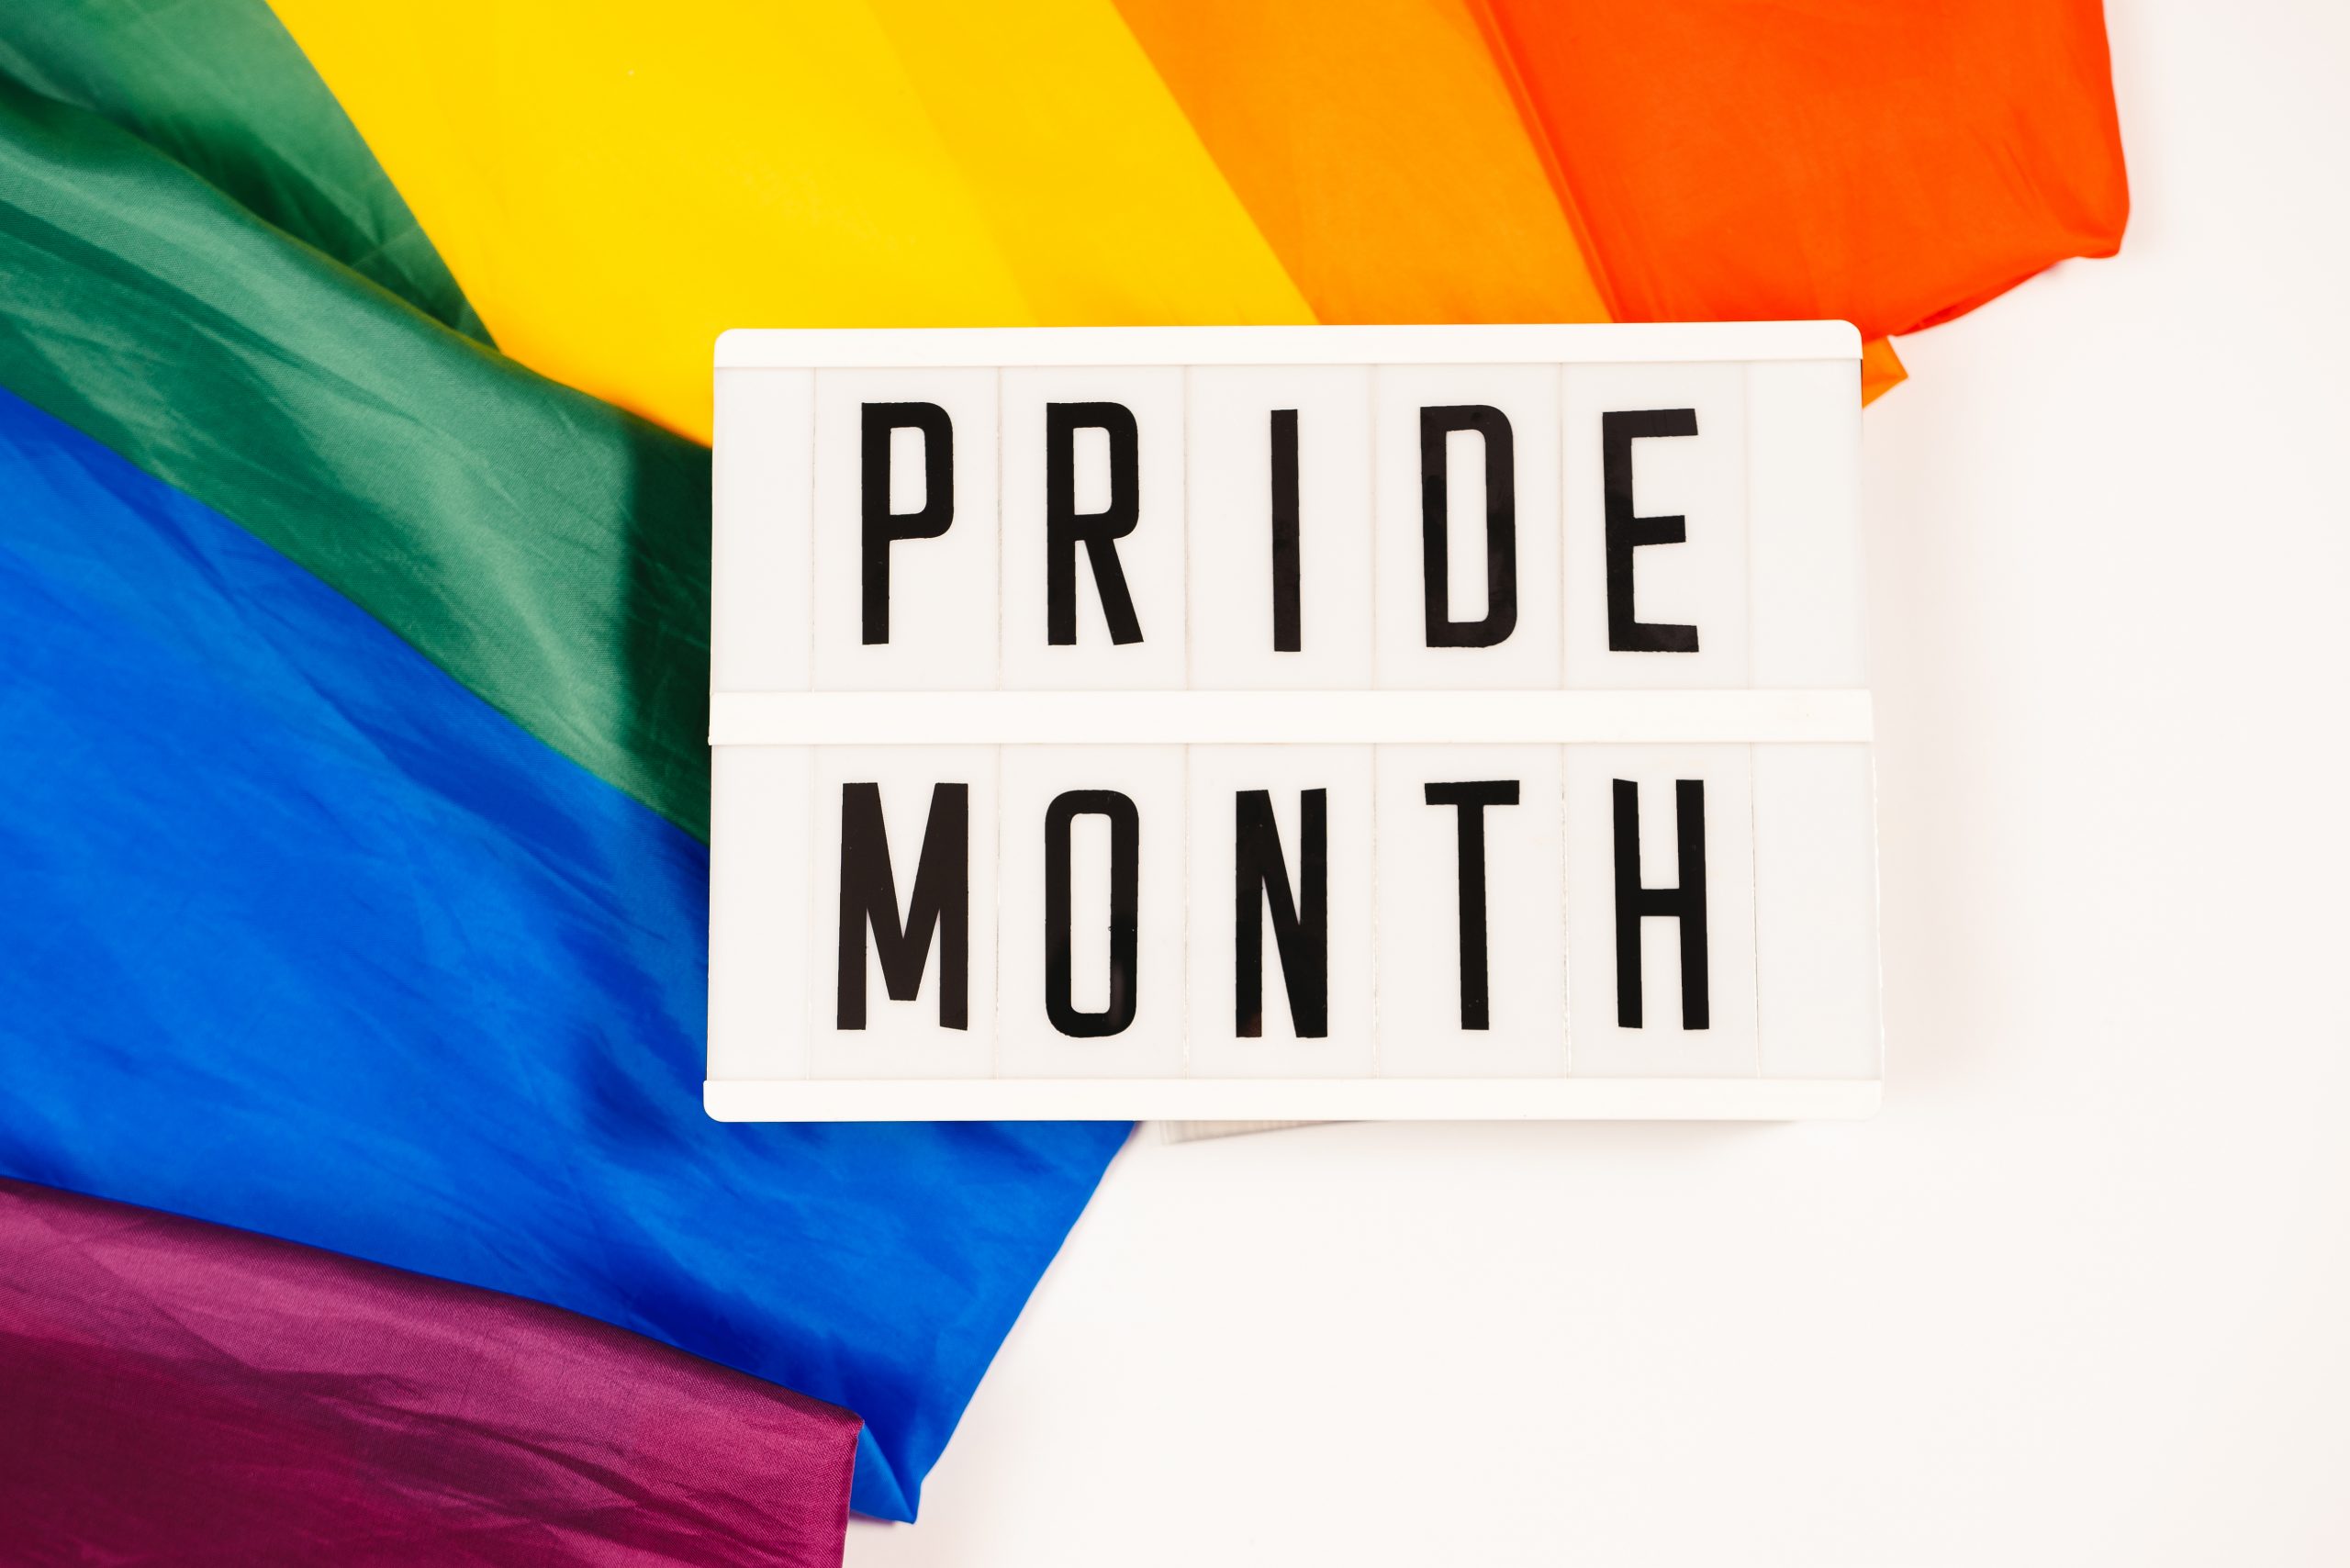 Rainbow Flag behind the words "Pride Month"